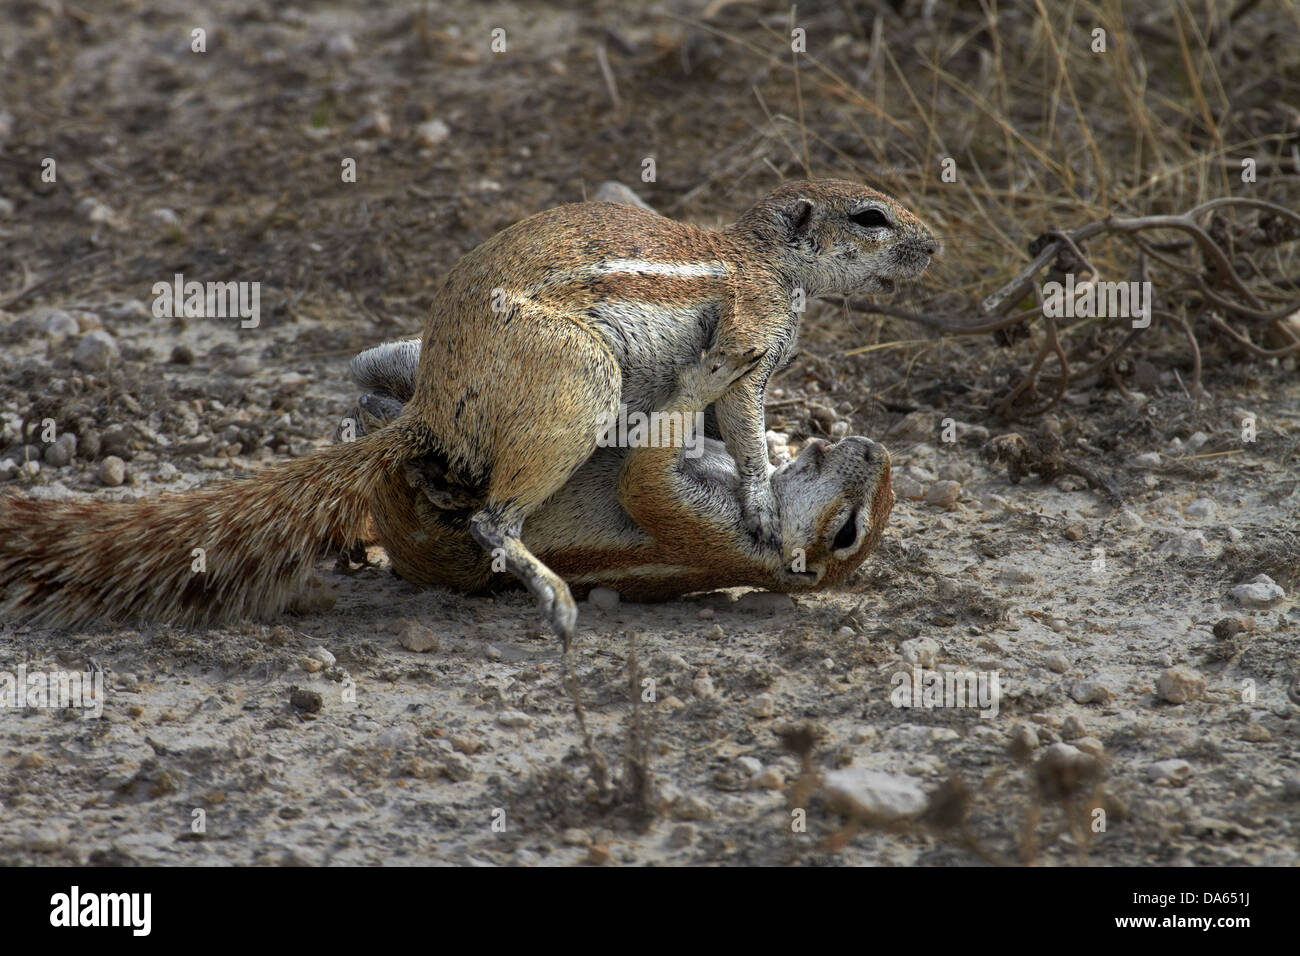 Cape ground squirrels fighting ( Xerus inauris ), Etosha National Park, Namibia, Africa Stock Photo